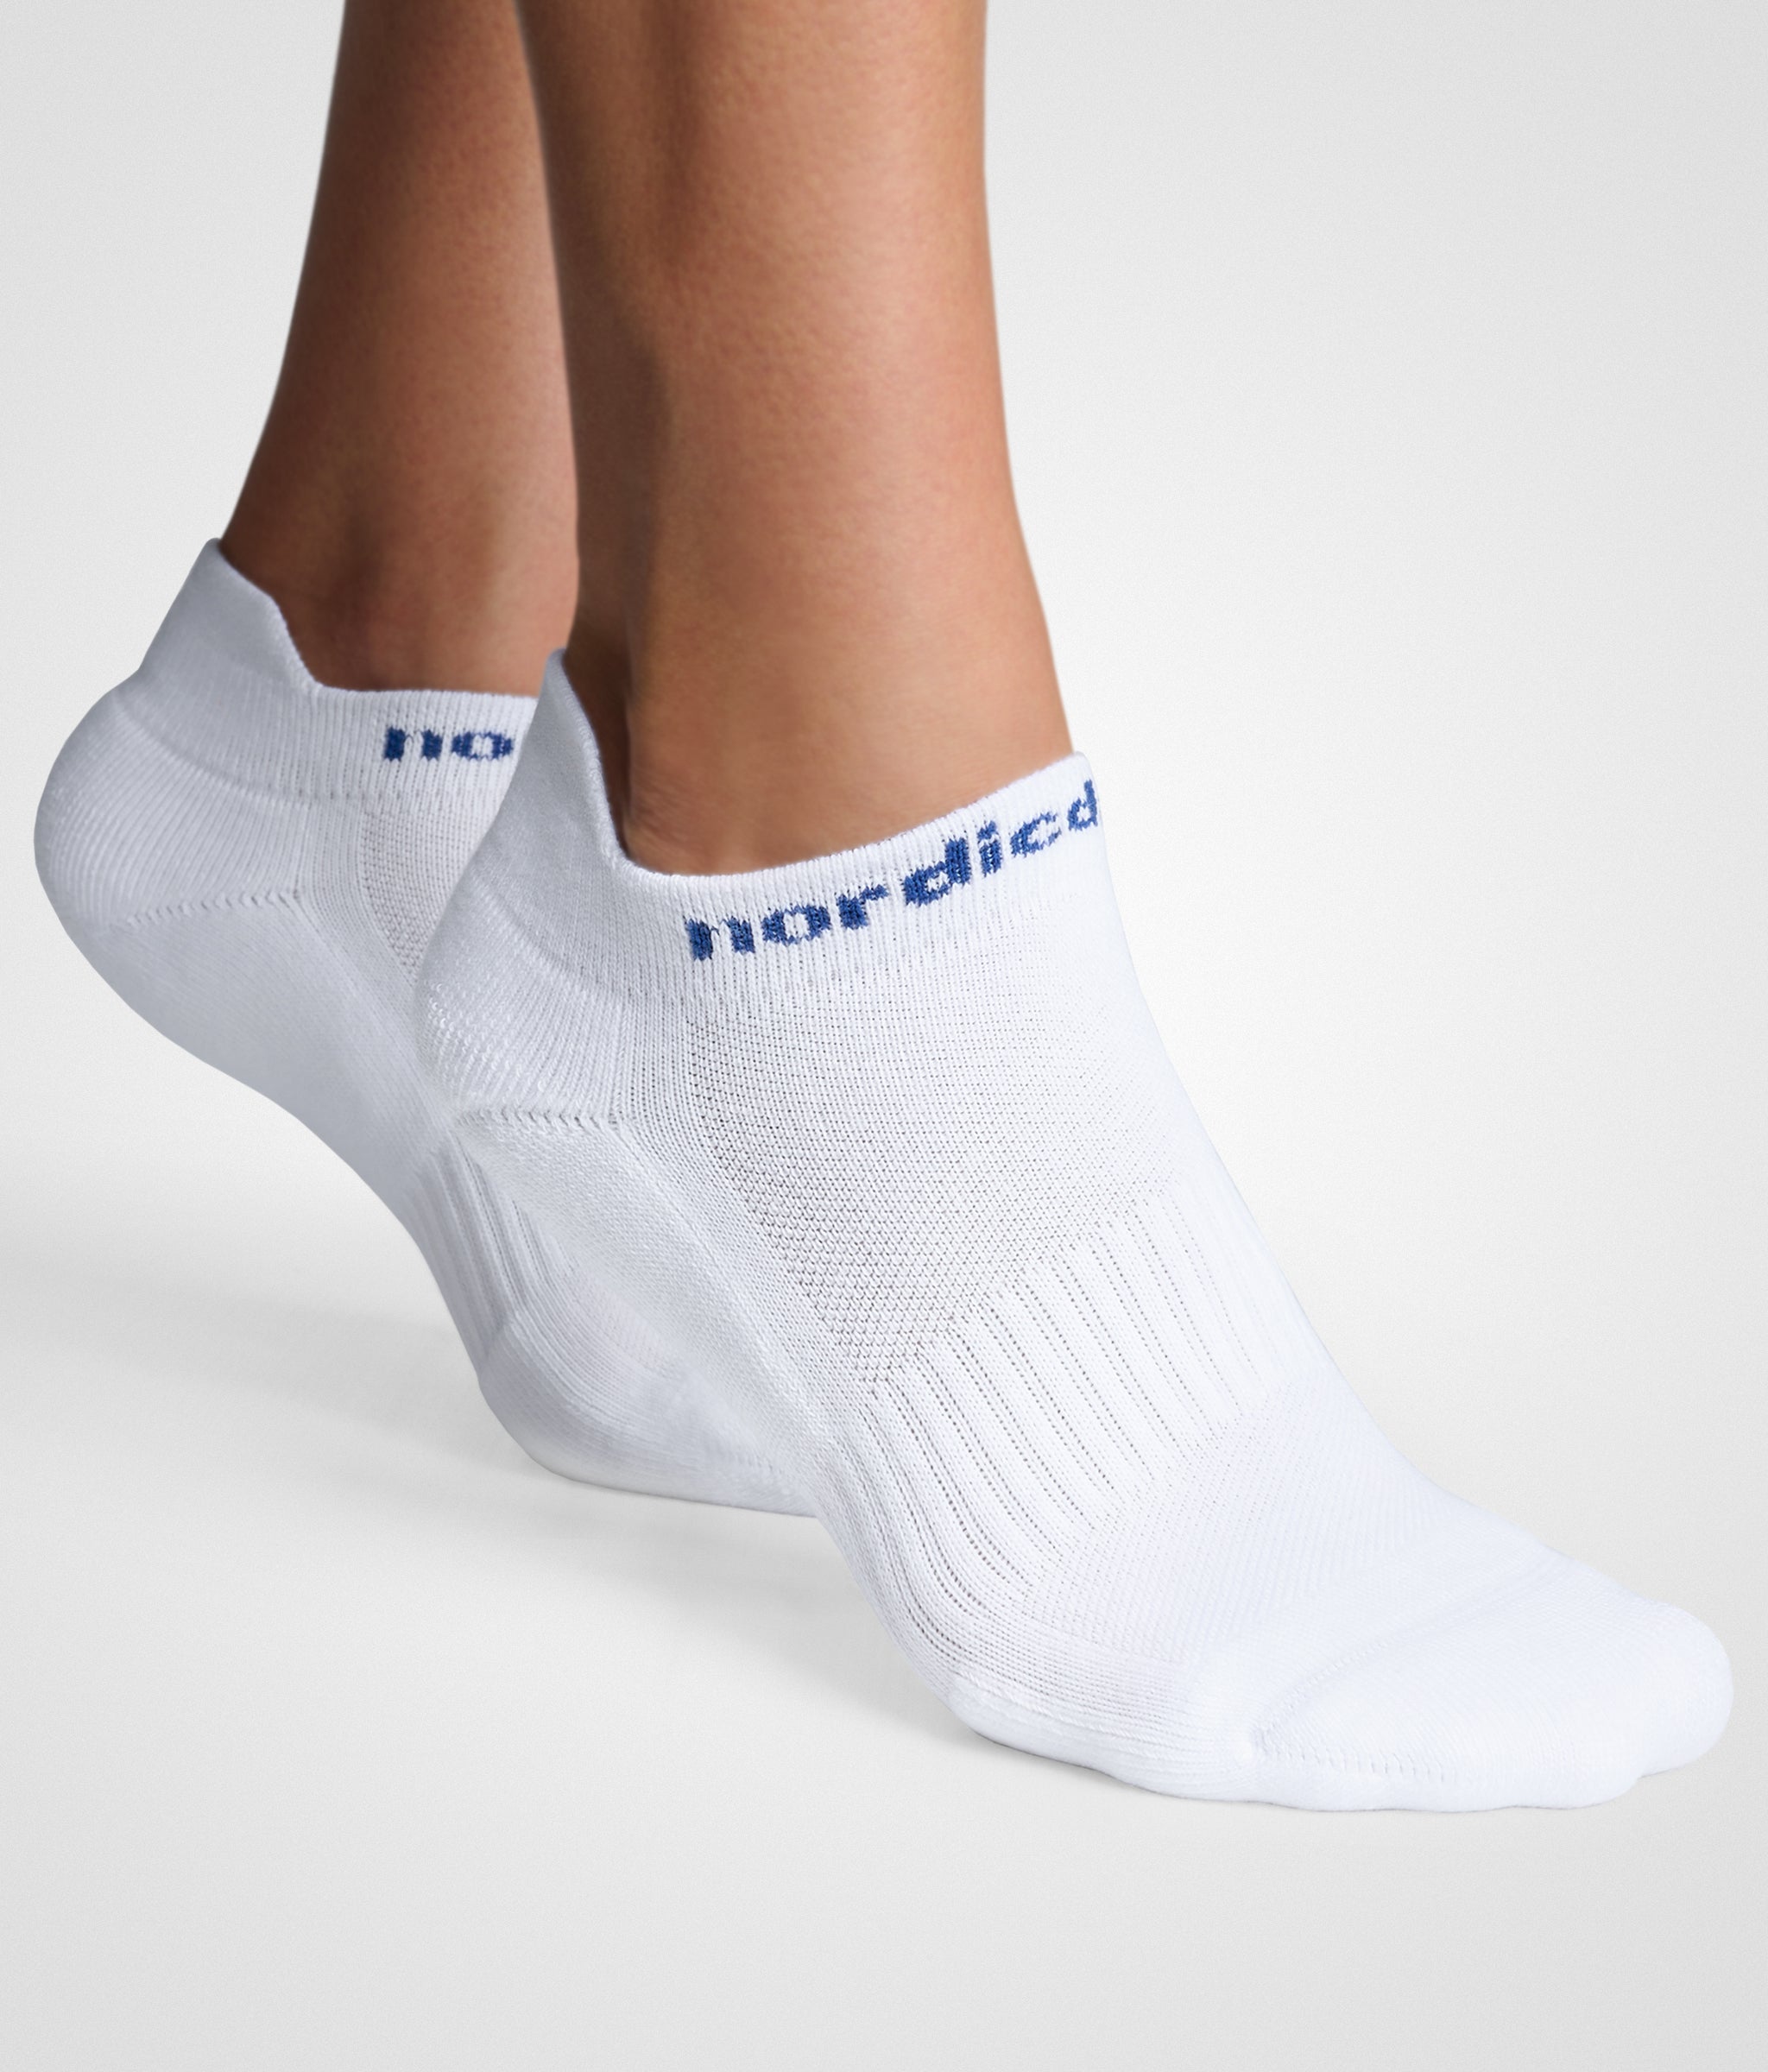 women's socks for tennis padel fitness training nordicdots.com